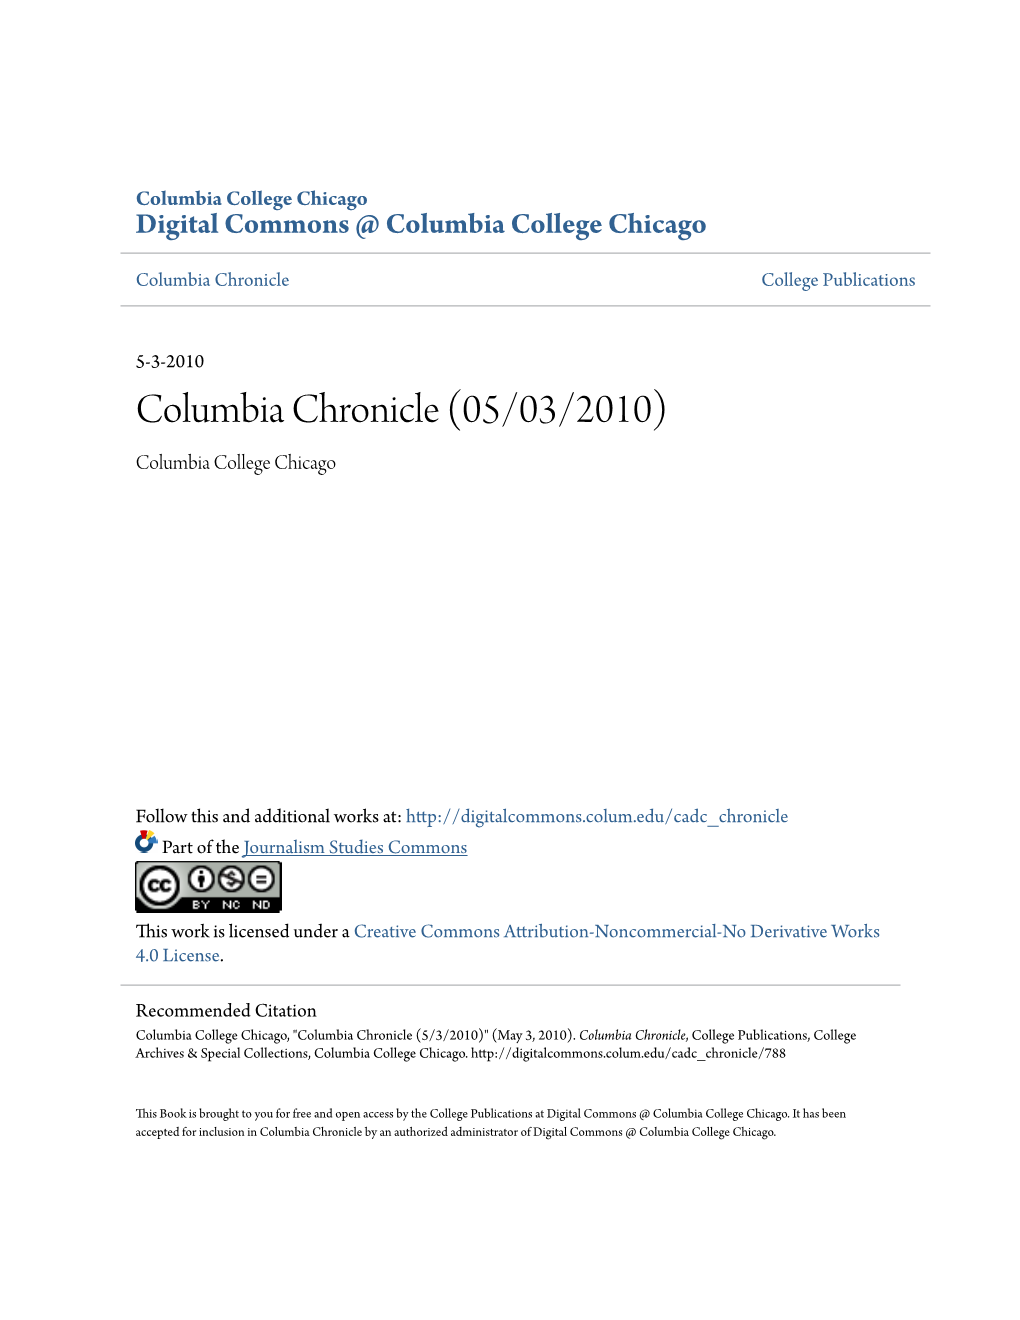 Columbia Chronicle (05/03/2010) Columbia College Chicago